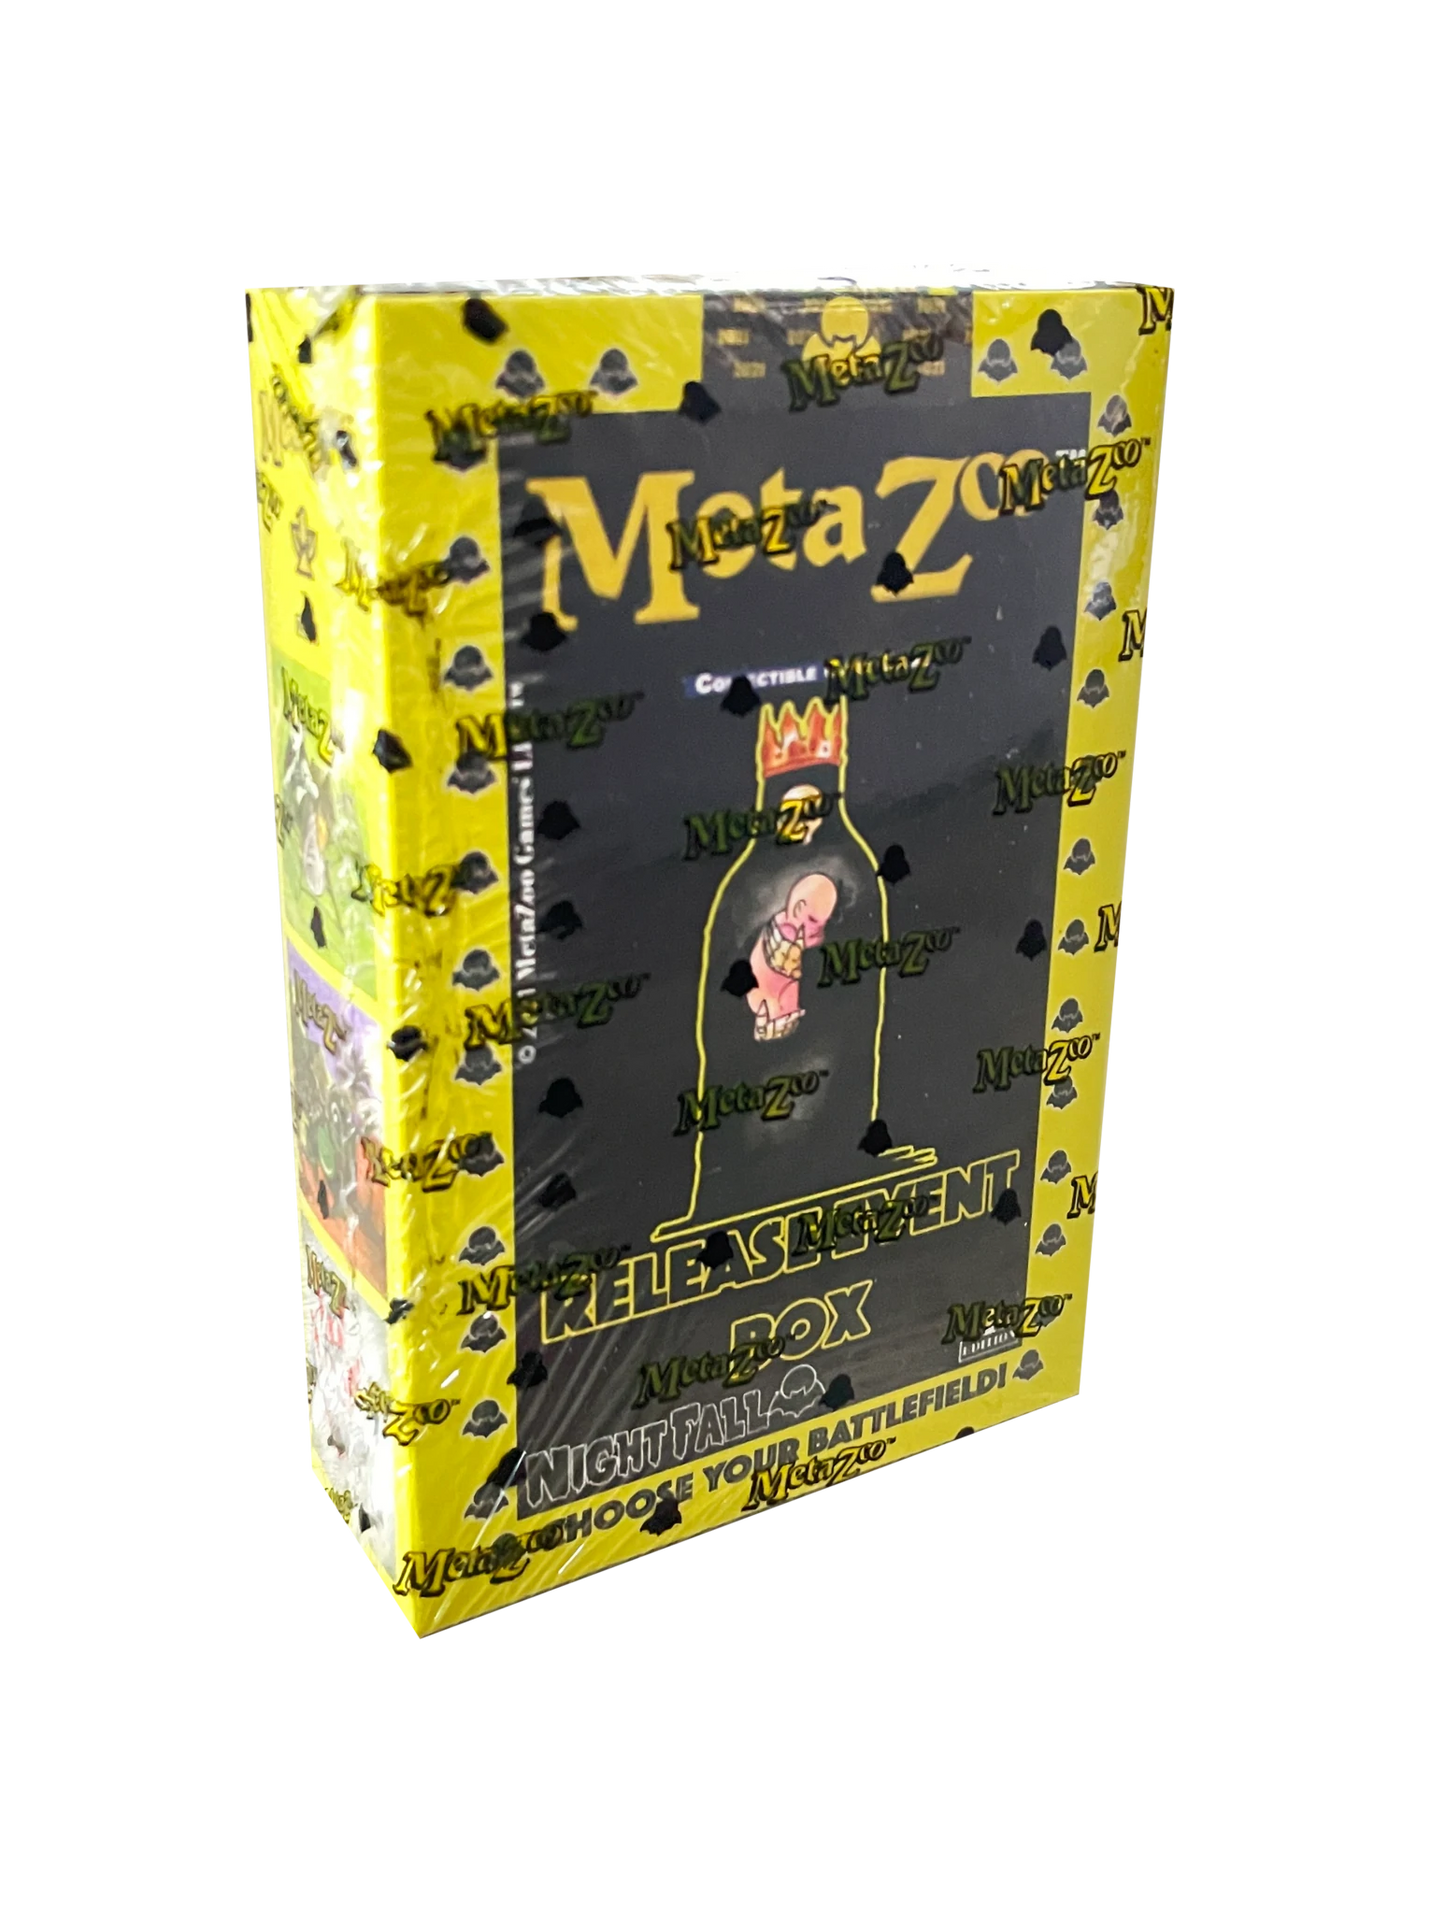 Meta Zoo: Release Event Box